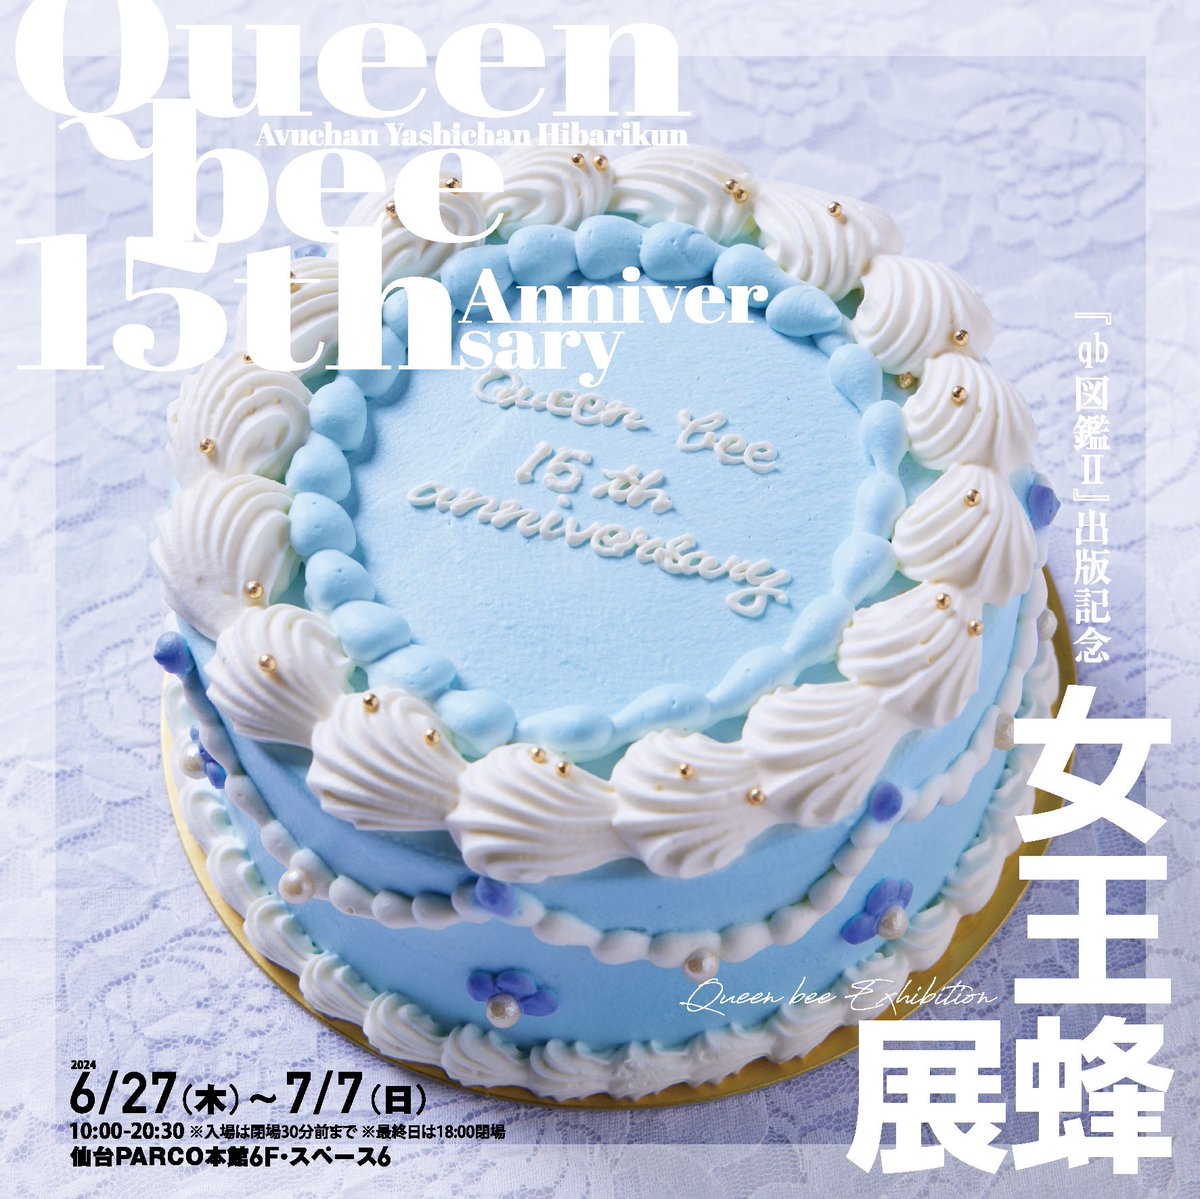 ＼『qb図鑑Ⅱ』出版記念 女王蜂展　巡回決定╱

「女王蜂」の結成15周年を記念する書籍『qb図鑑Ⅱ』(ワニブックス)が3月29日発売されたことにちなんで、パネル展を中心とした展示イベントを開催。

詳しくはこちらをチェック↓
sendai.parco.jp/pnews/detail/?…